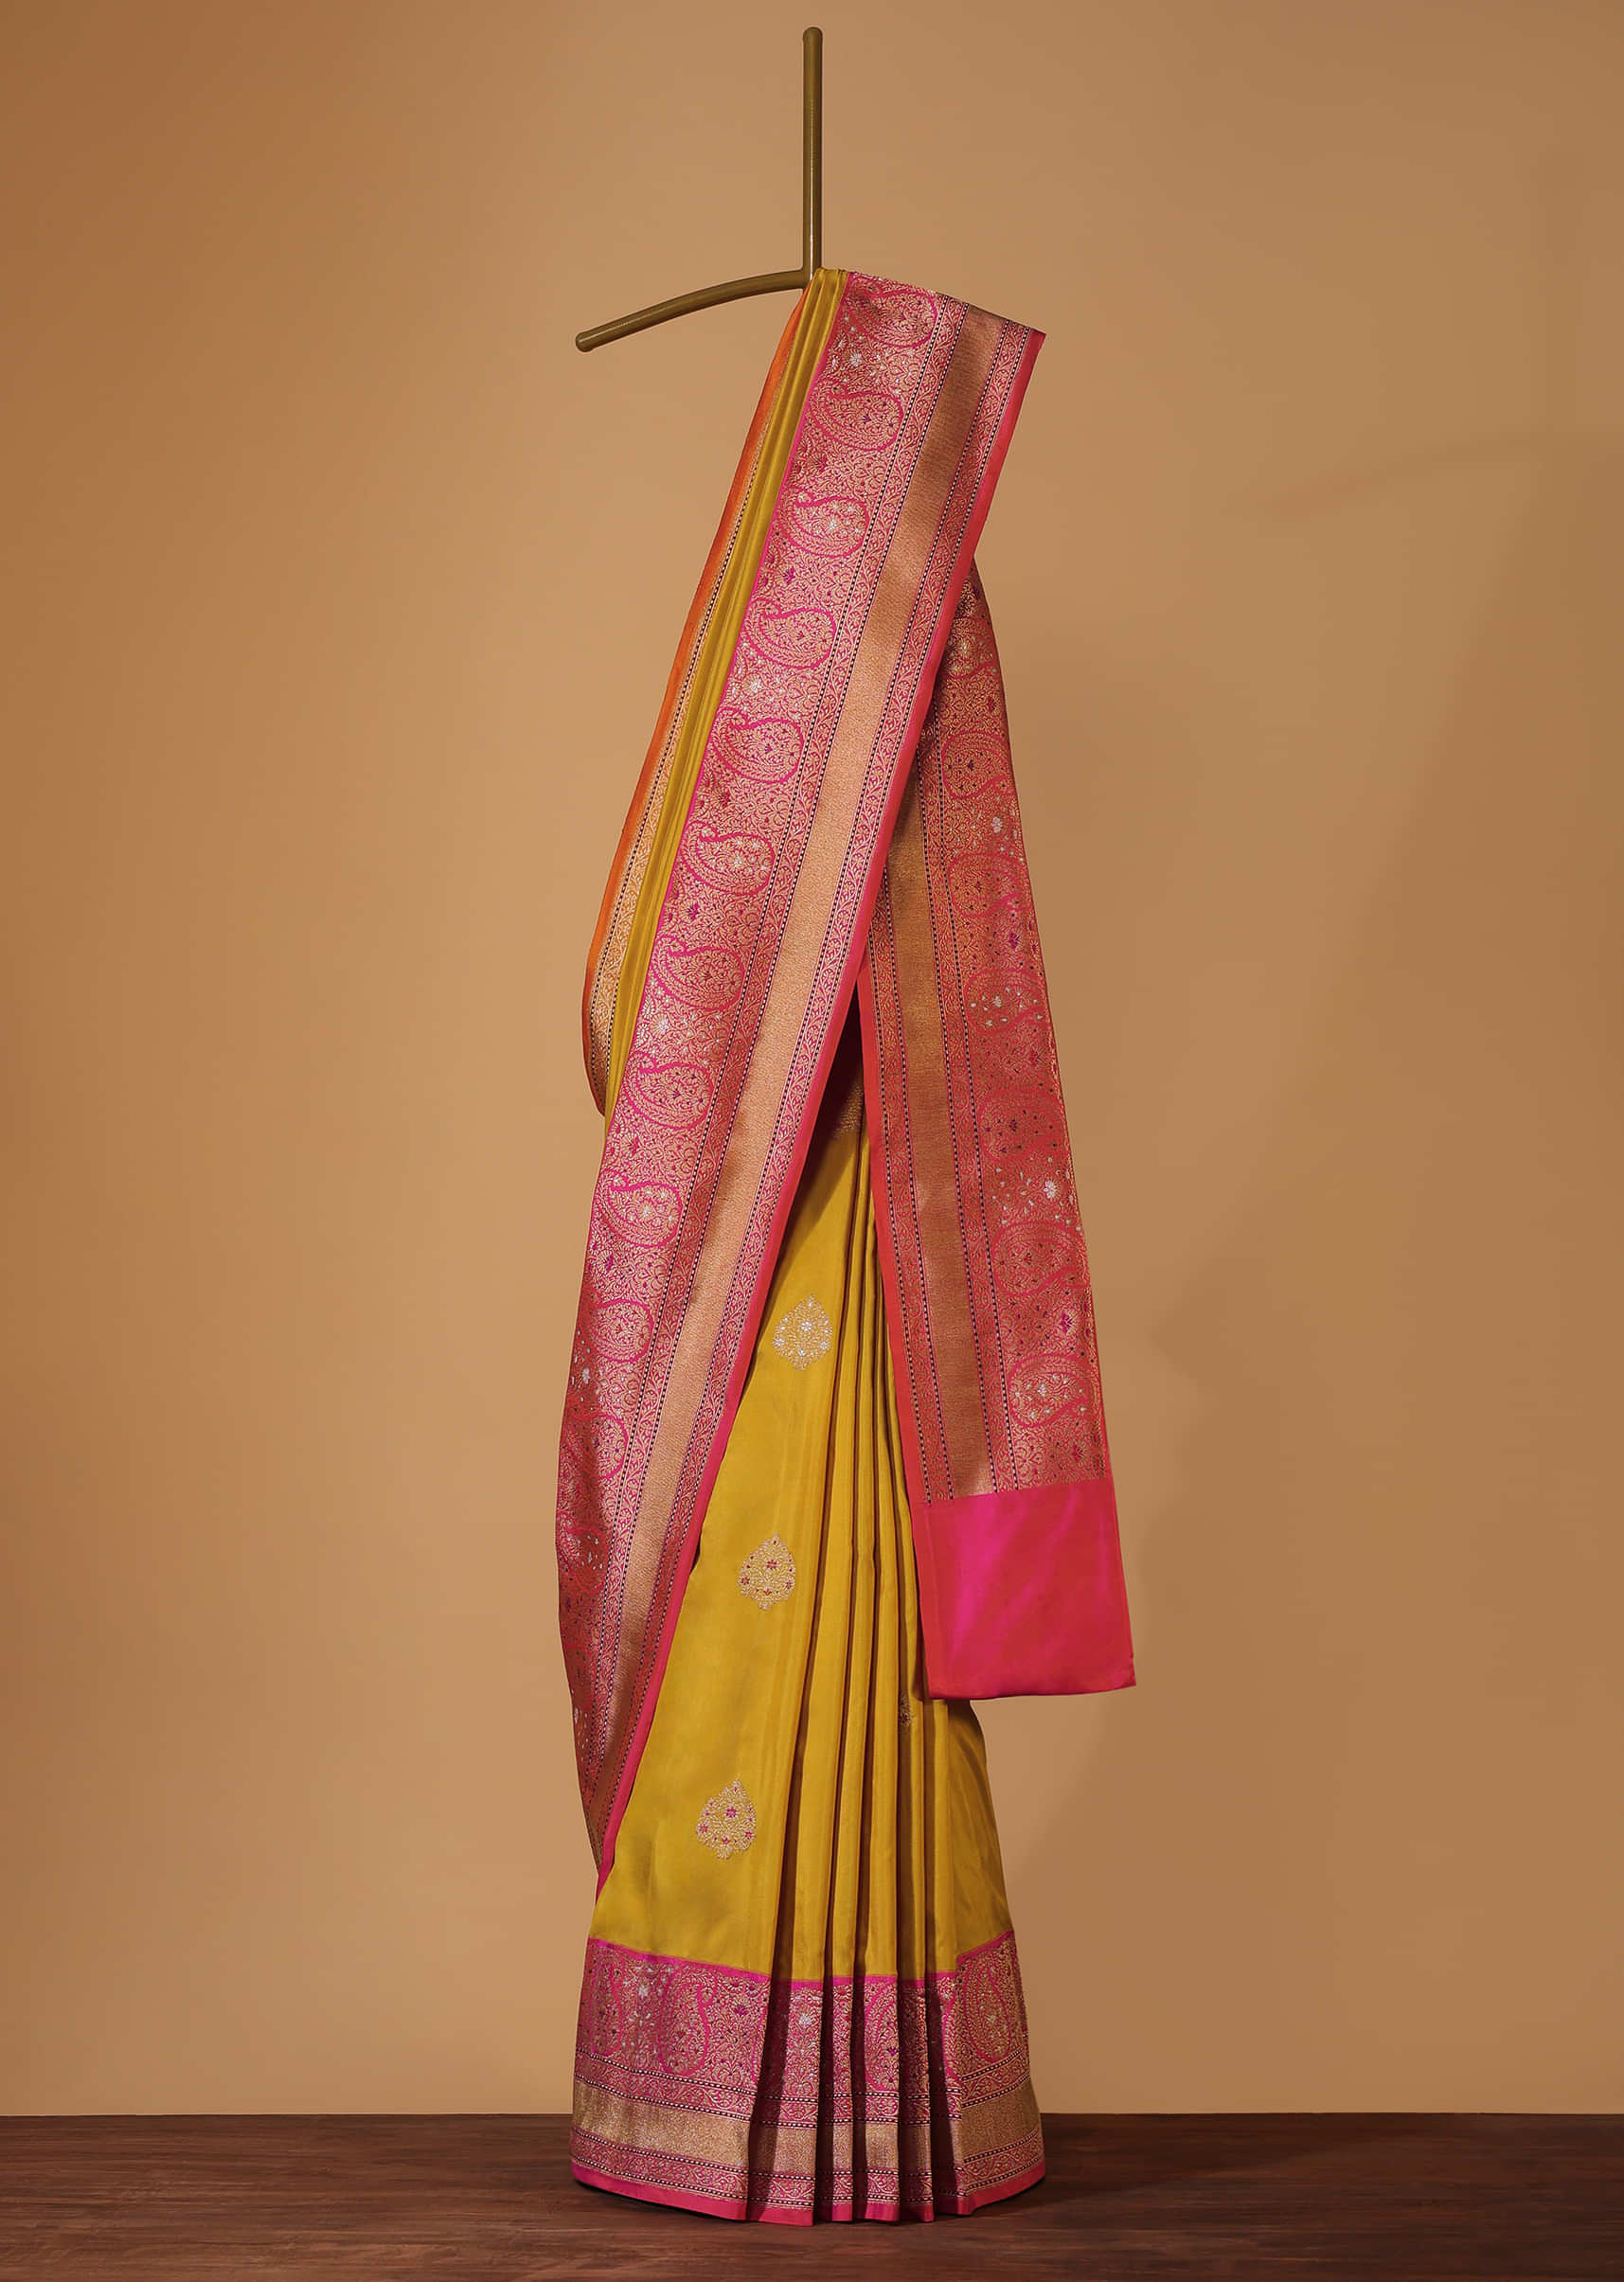 Mustard Yellow Handloom Banarasi Saree In Katan Silk With Meenakari Border And Unstitched Blouse